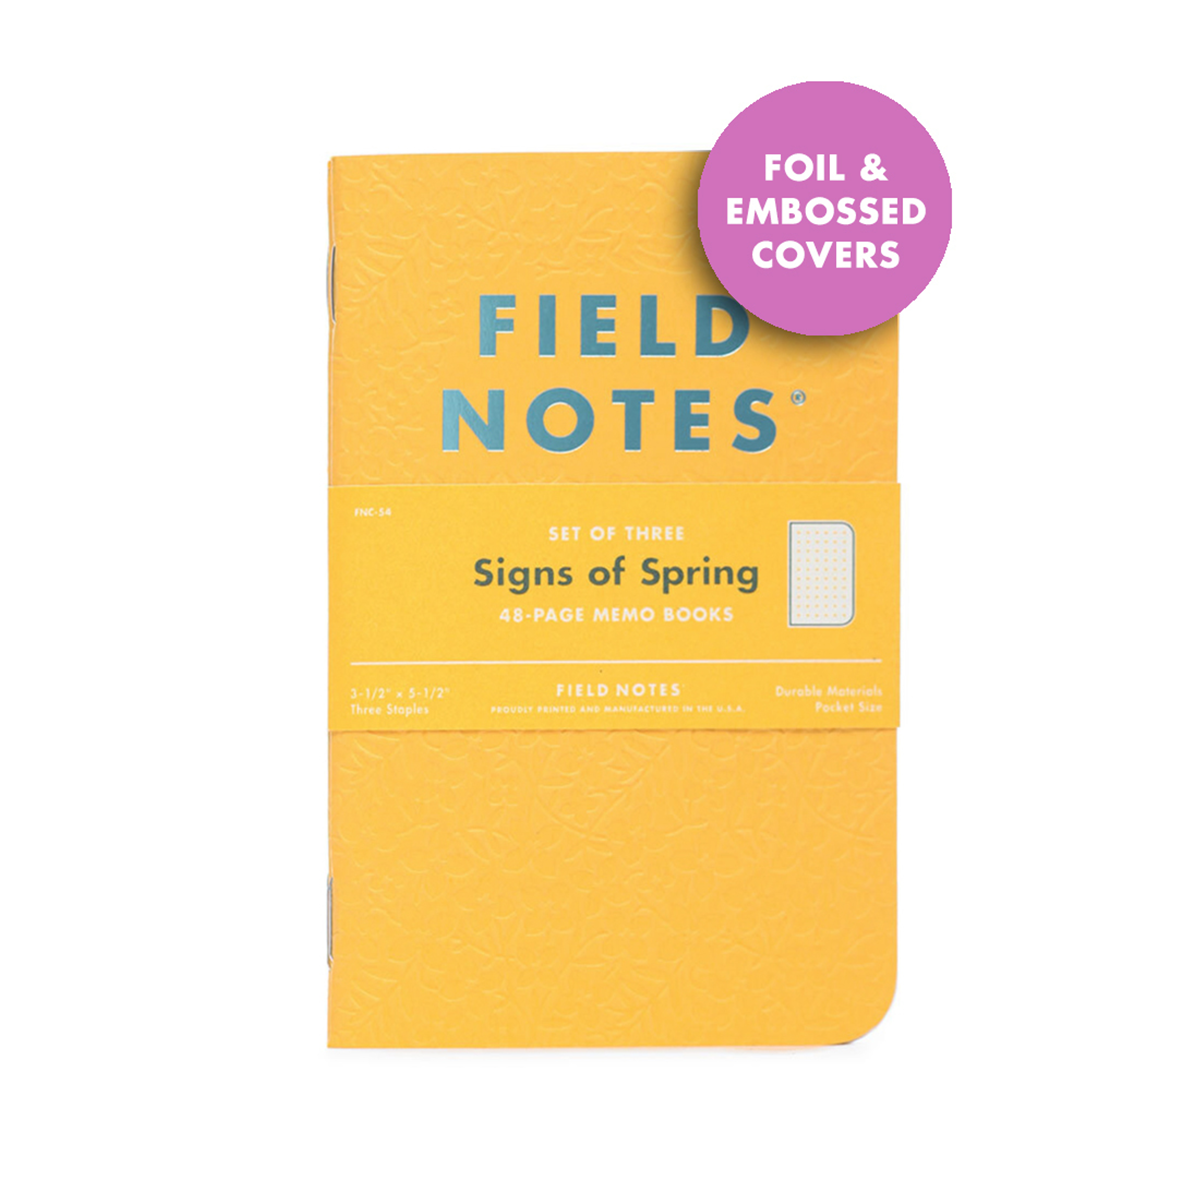 Field Notes - Birch Bark - 3 Pack